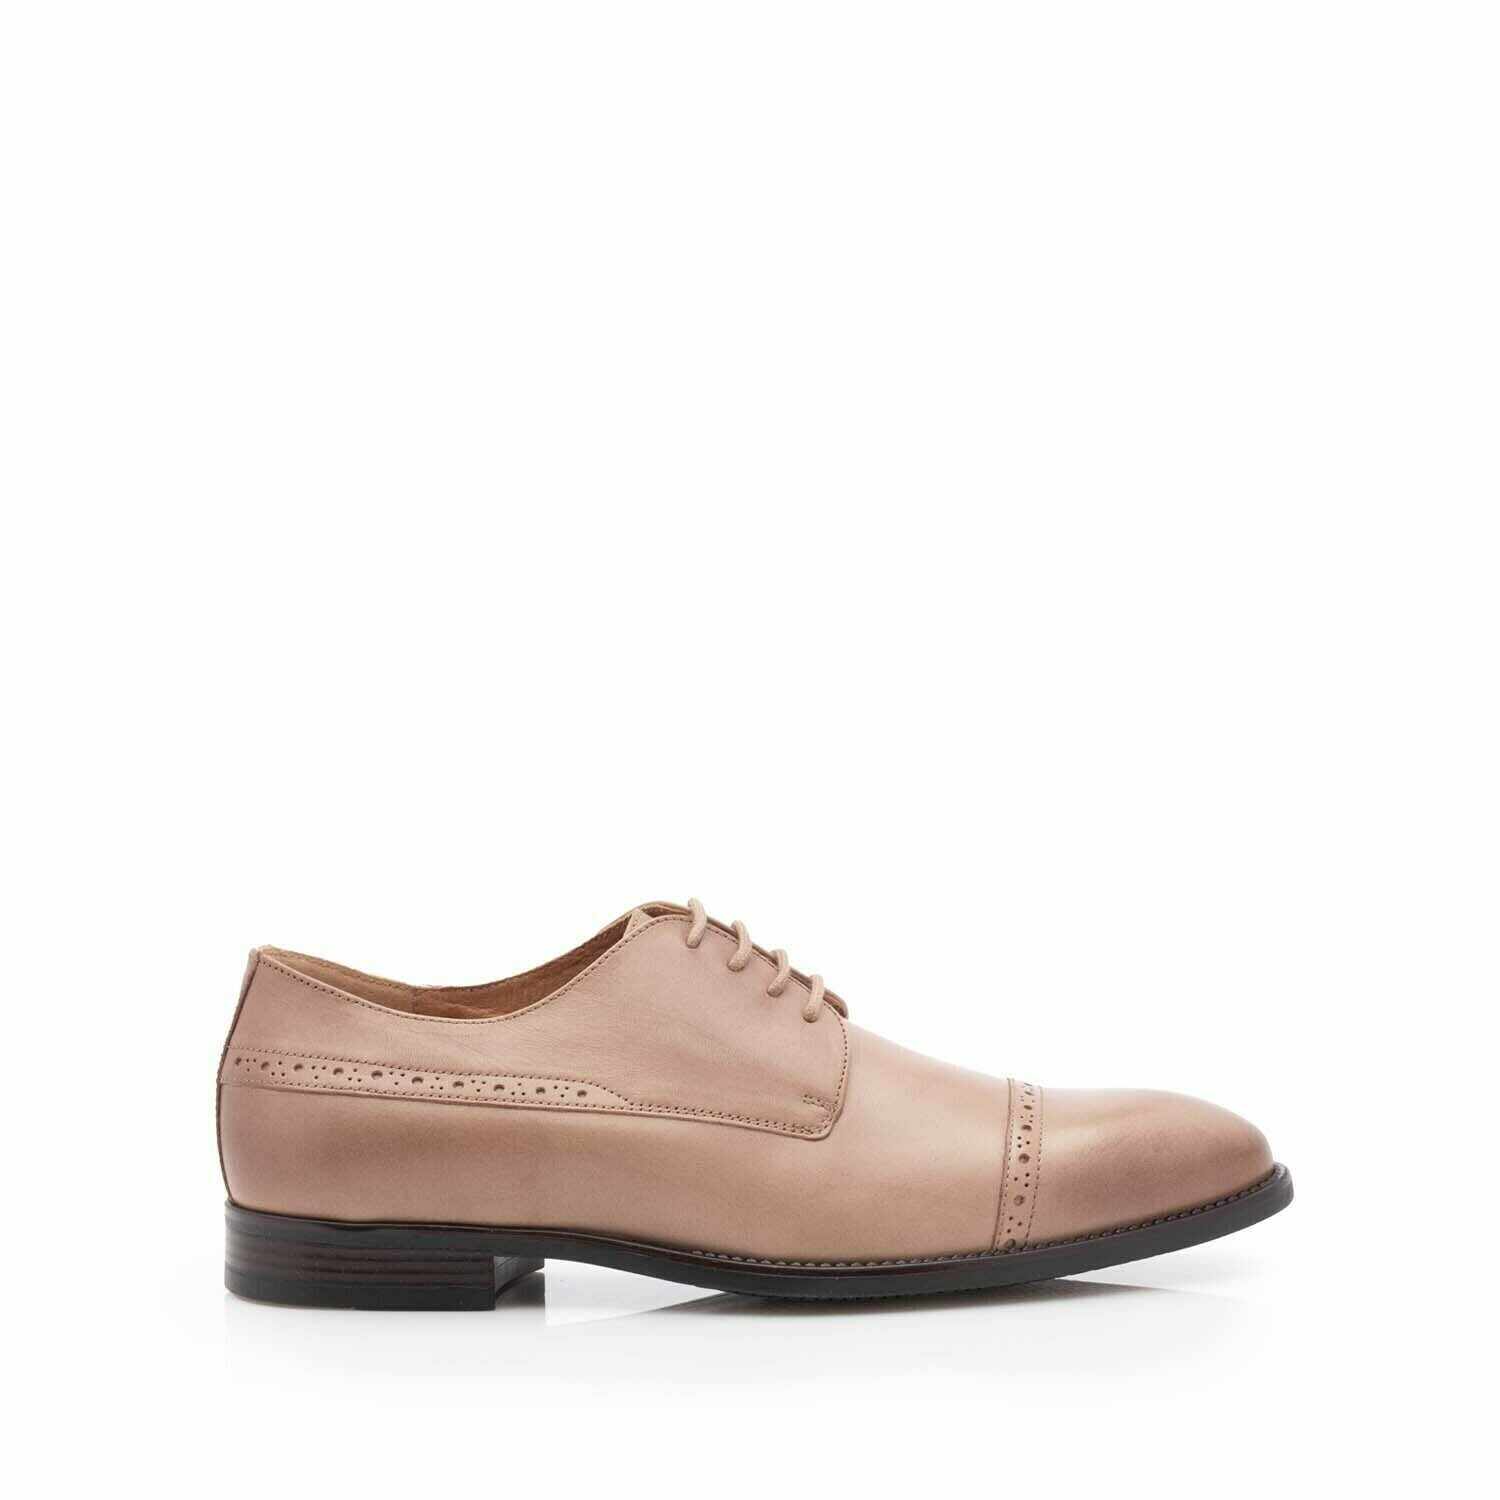 Pantofi eleganti barbati din piele naturala,Leofex - 510 Taupe Box